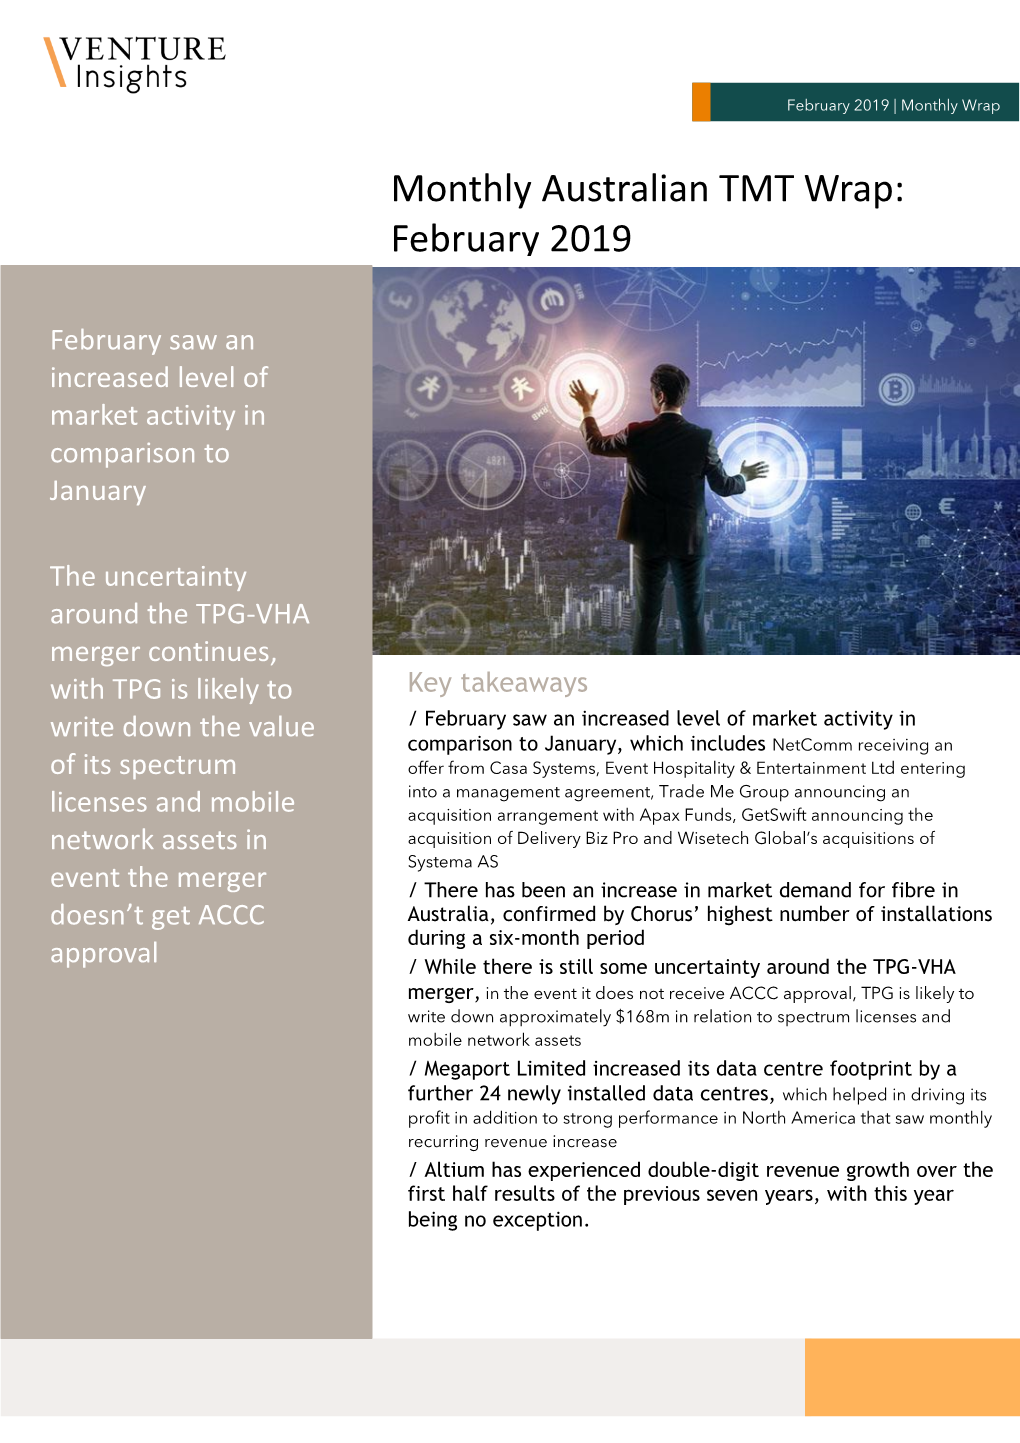 Monthly Australian TMT Wrap: February 2019